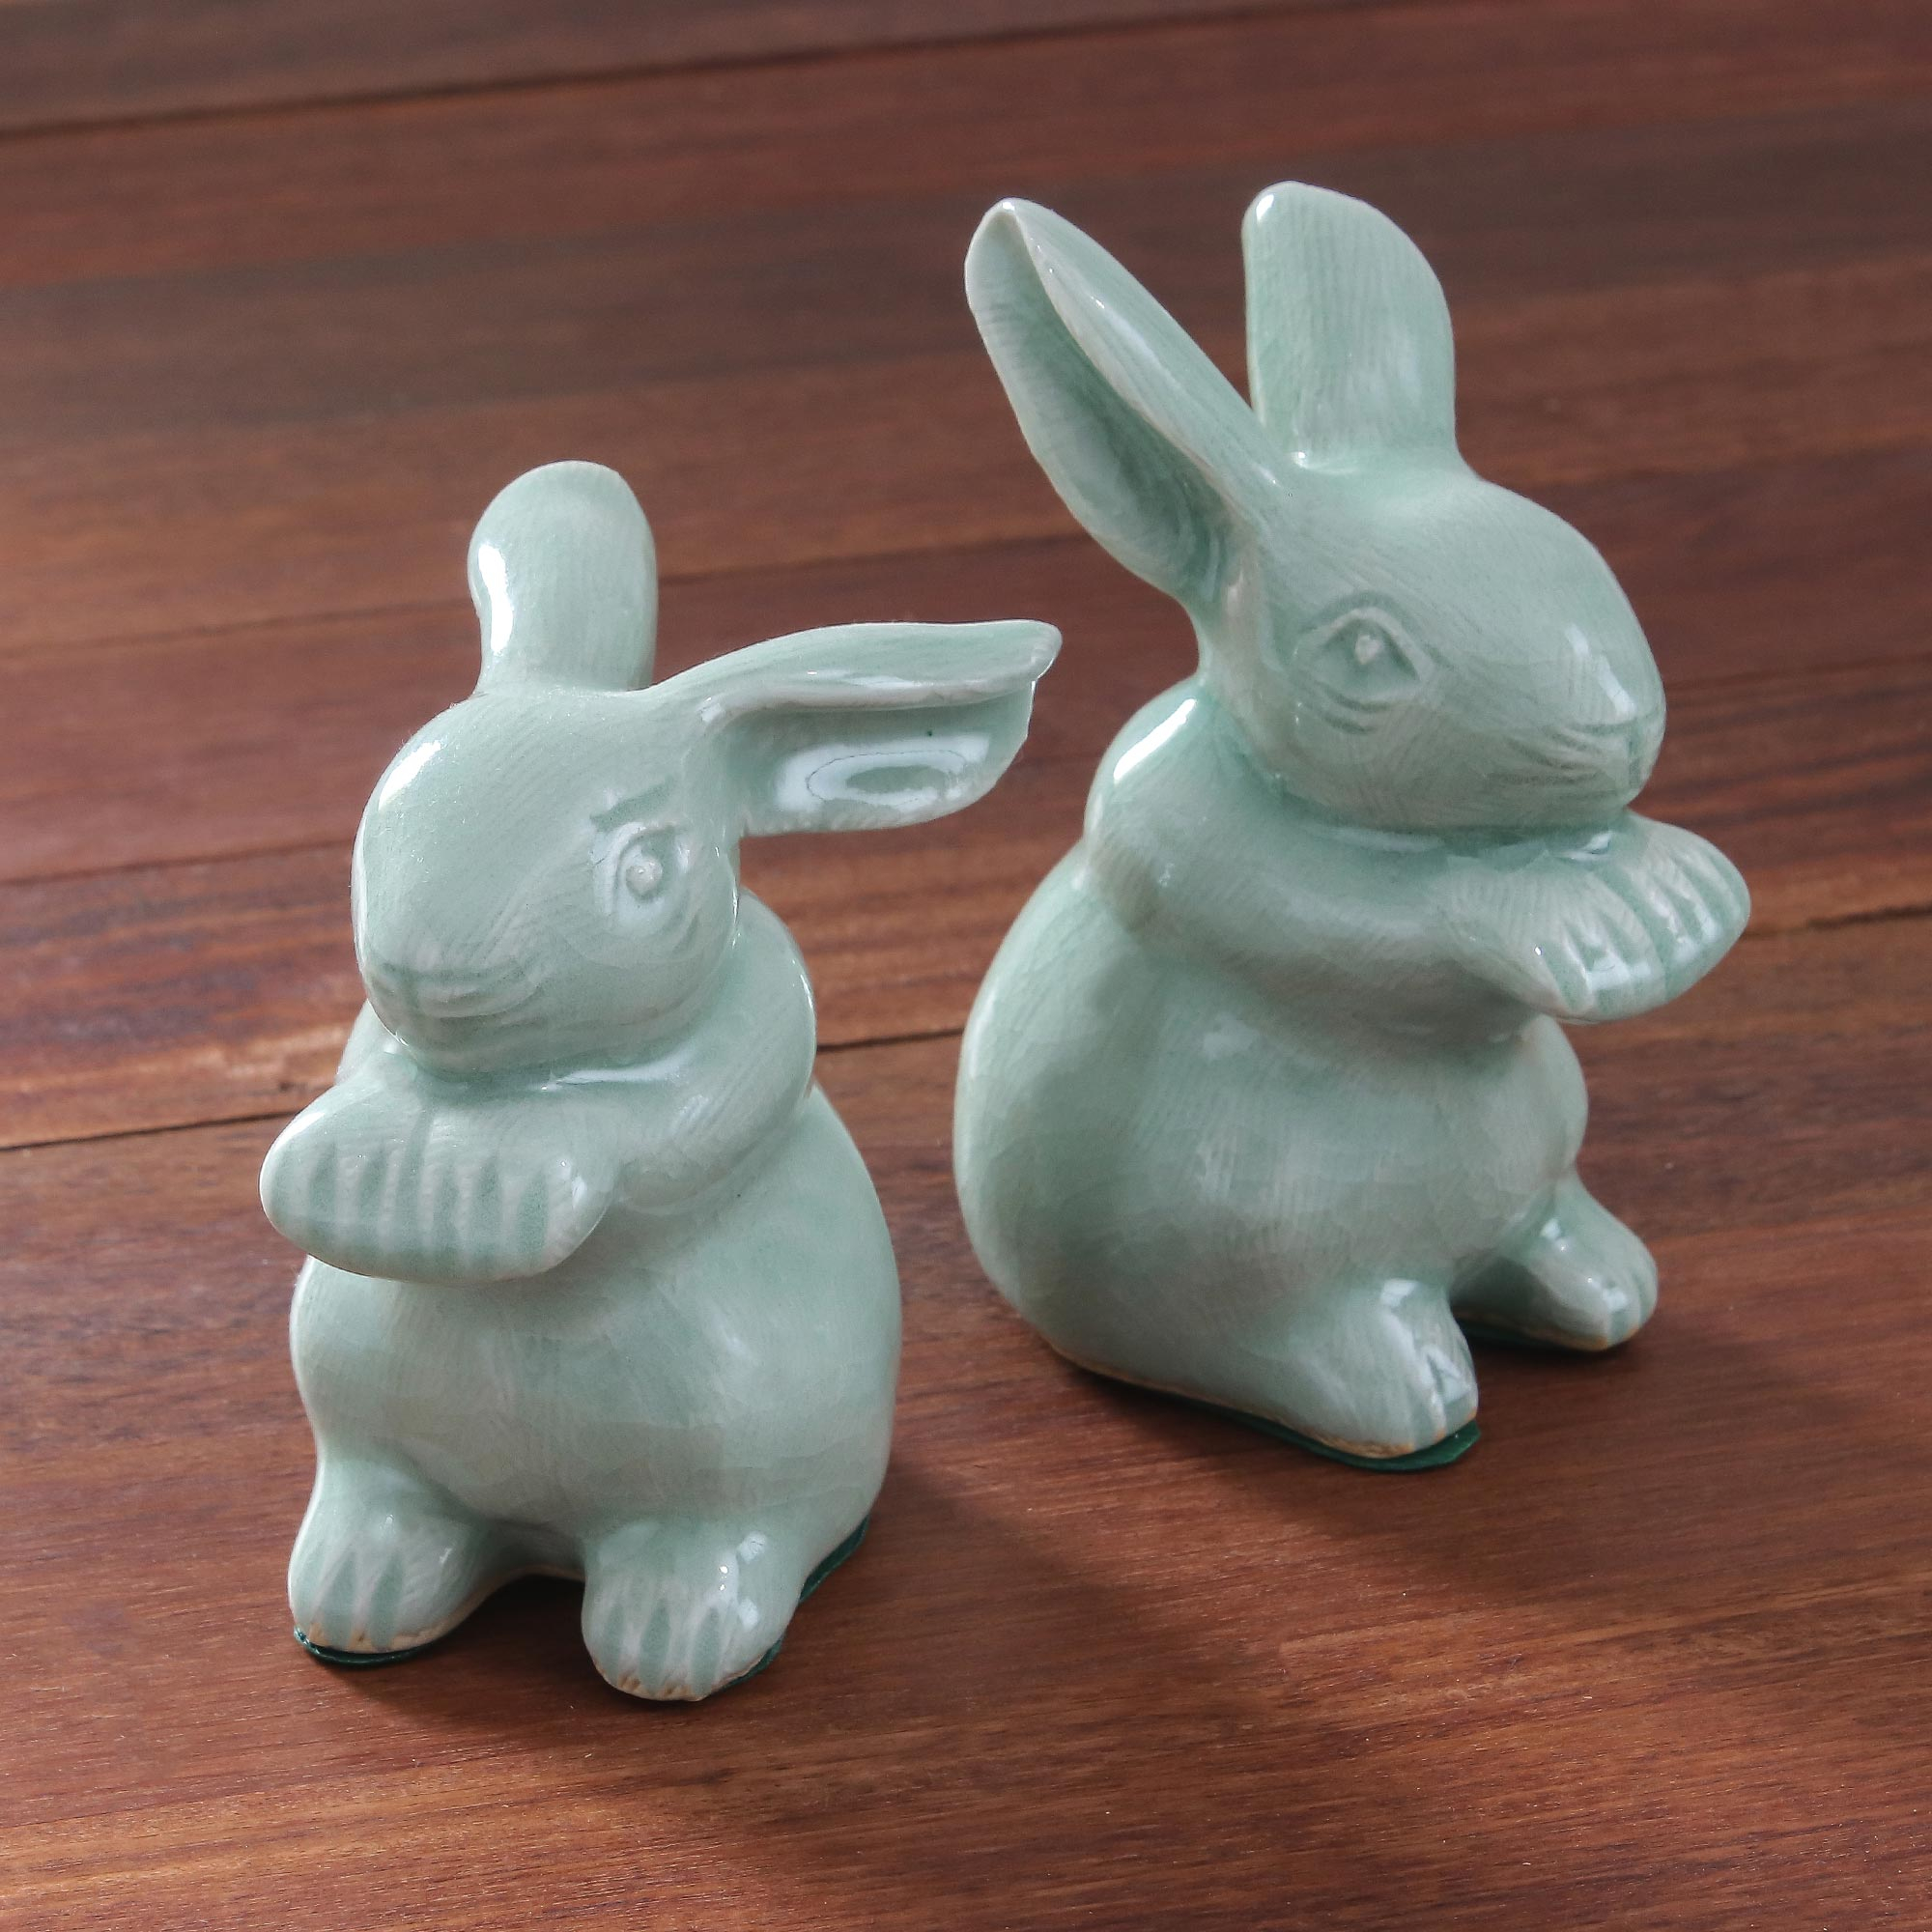 Celadon Ceramic Rabbit Figurines from Thailand (Pair), 'Green Rabbits